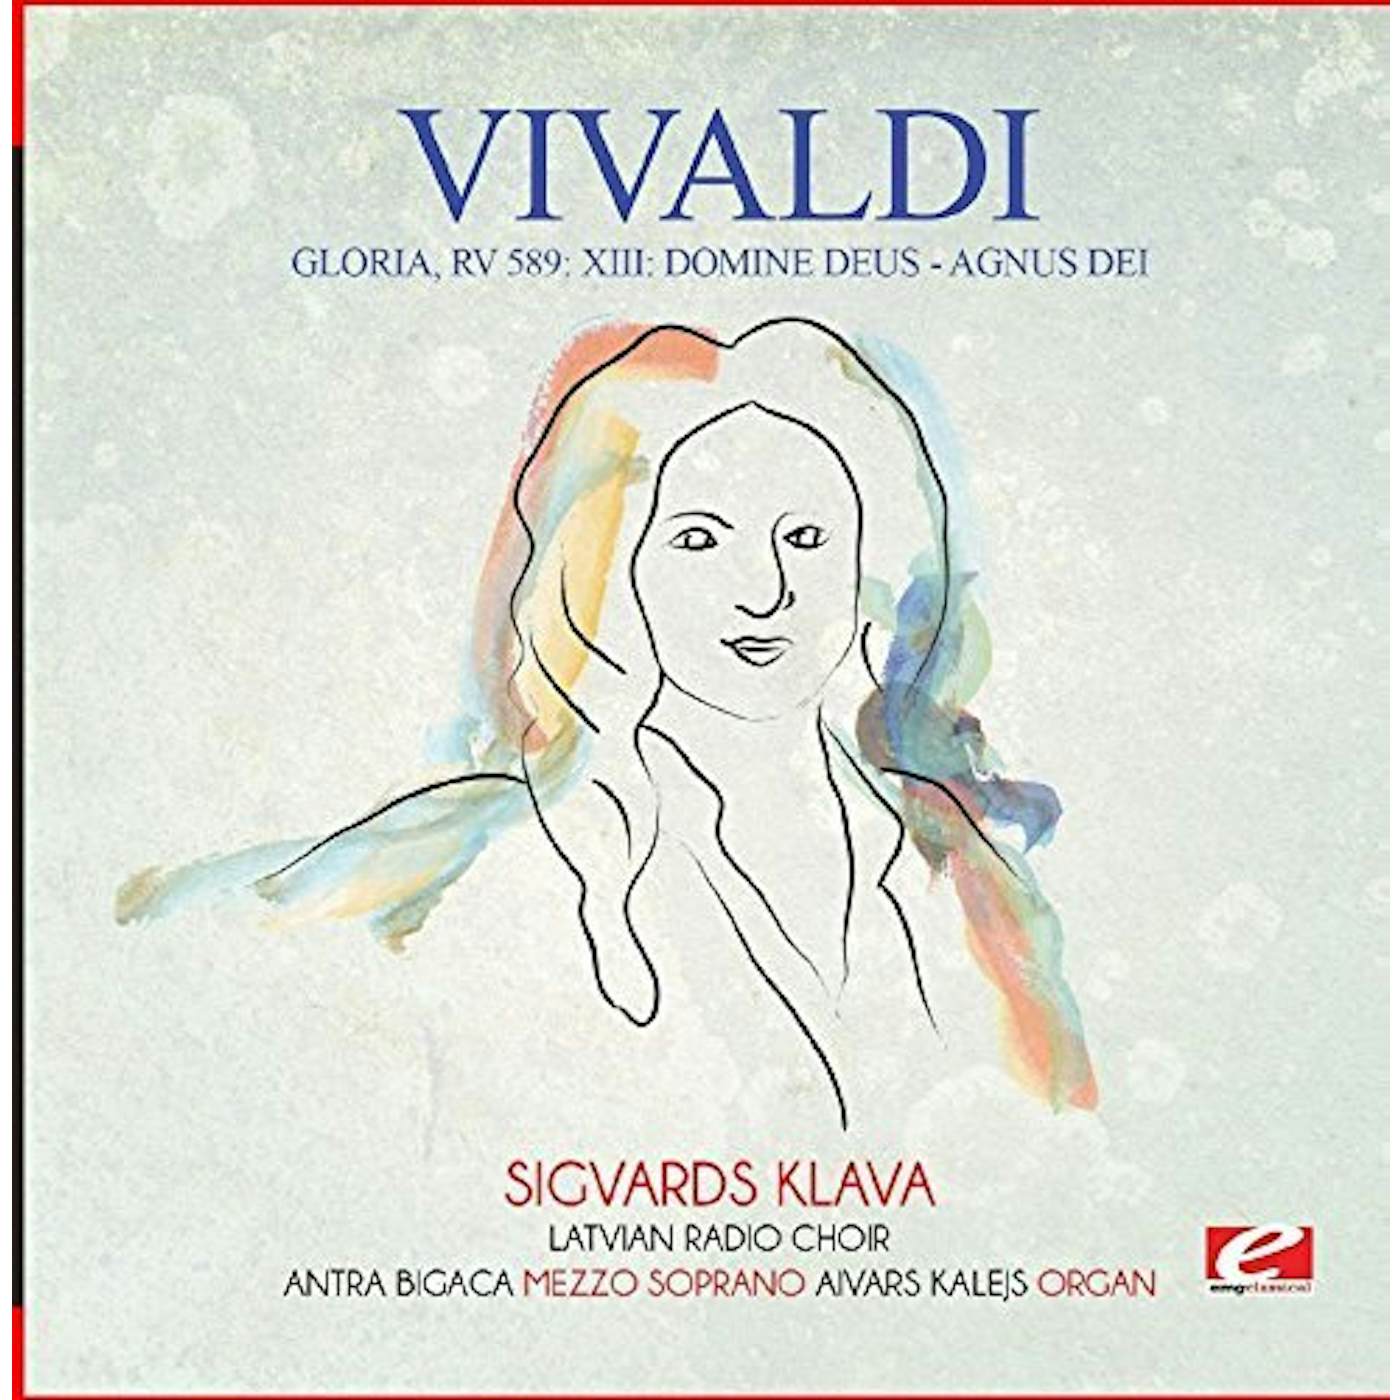 Antonio Vivaldi GLORIA RV 589: XIII: DOMINE DEUS - AGNUS DEI CD